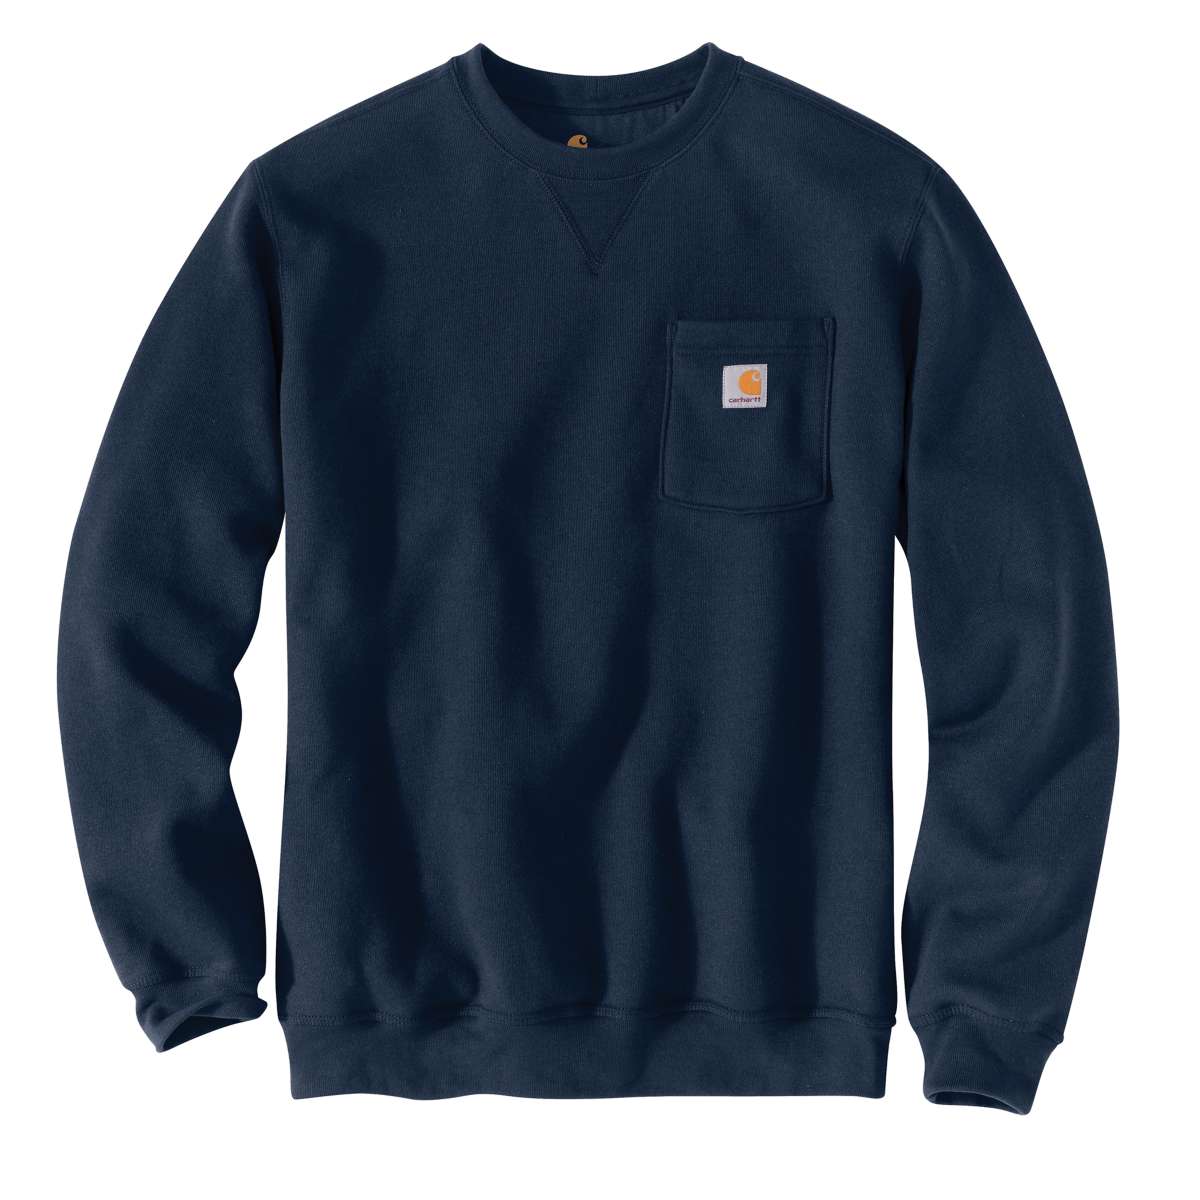 Midweight Pocket Sweatshirt in Original Navy